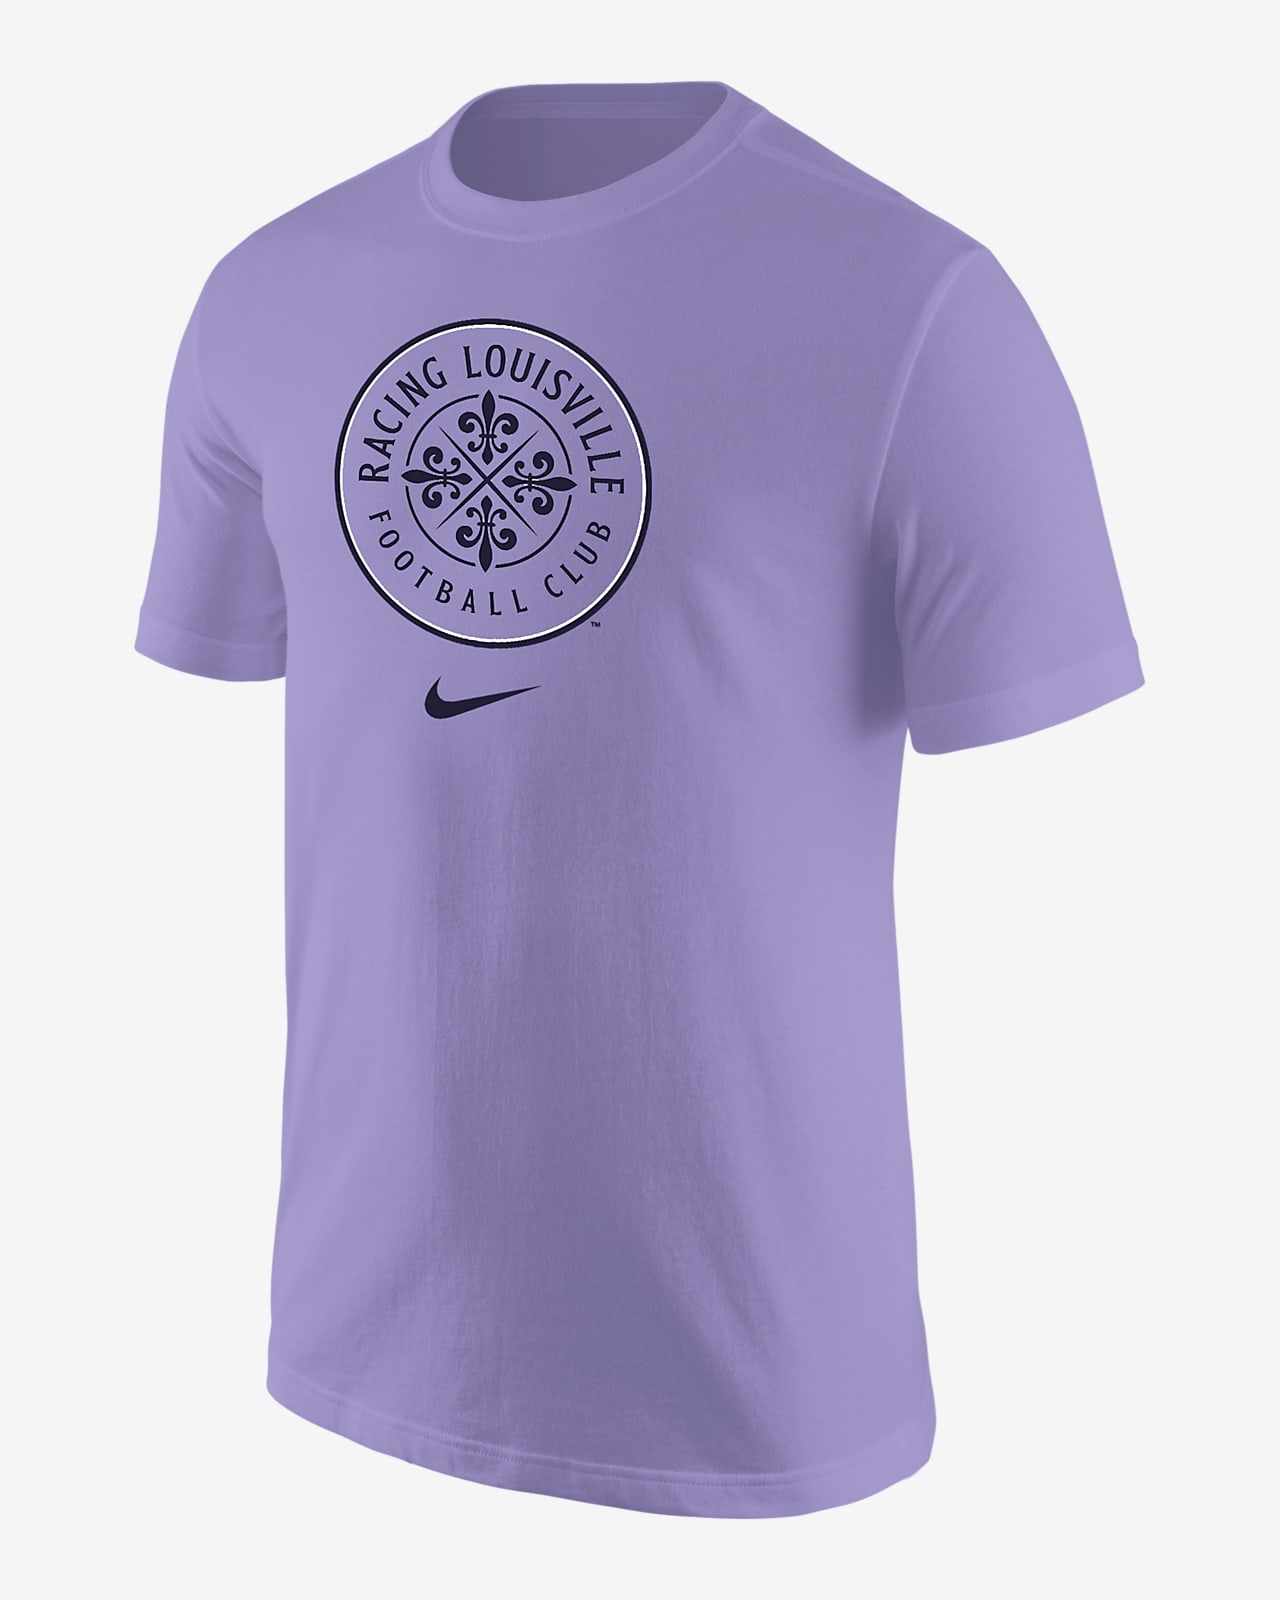 Racing Louisville FC Men's Nike NWSL T-Shirt